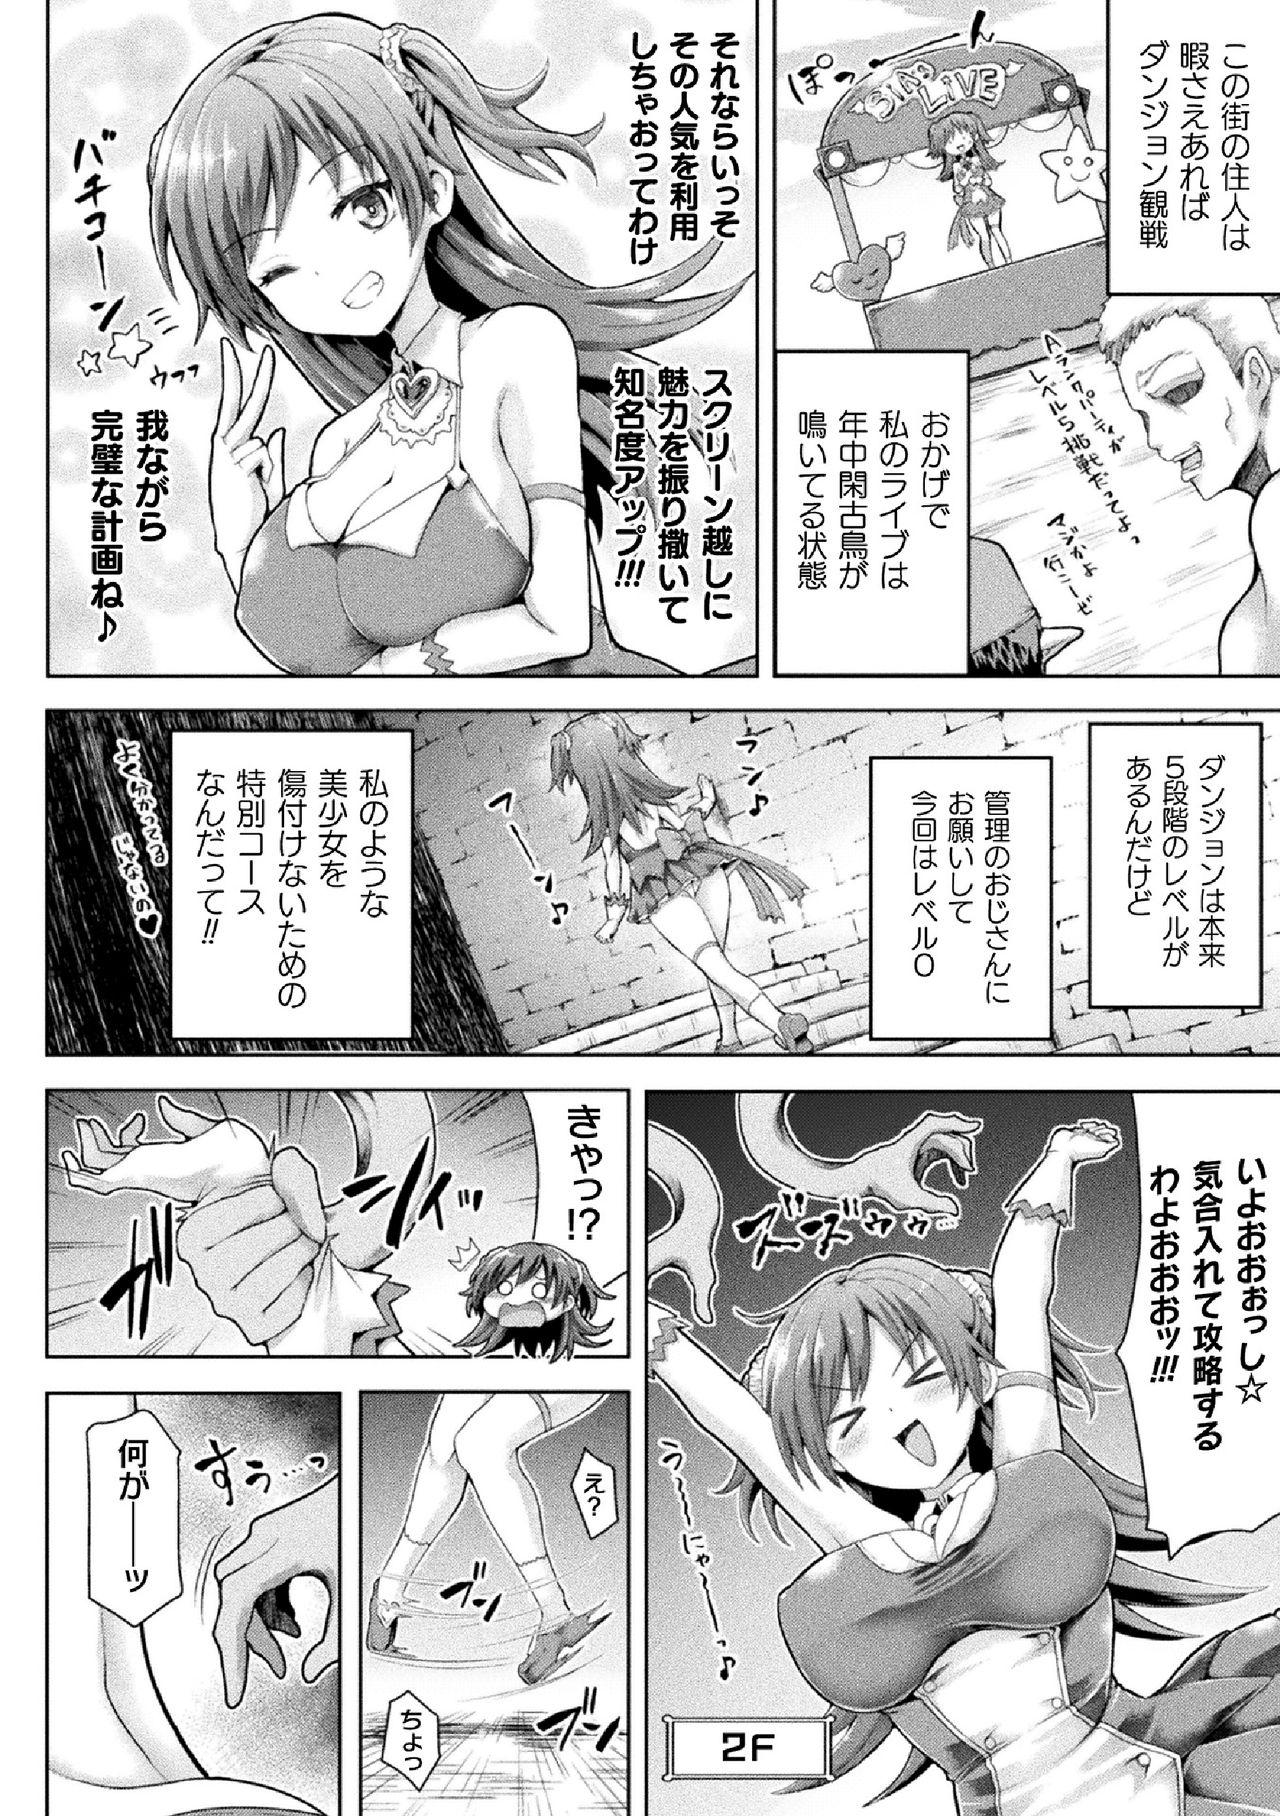 2D Comic Magazine Zecchou Kairaku ga Tomaranai Ero-Trap Dungeon Vol.2 45